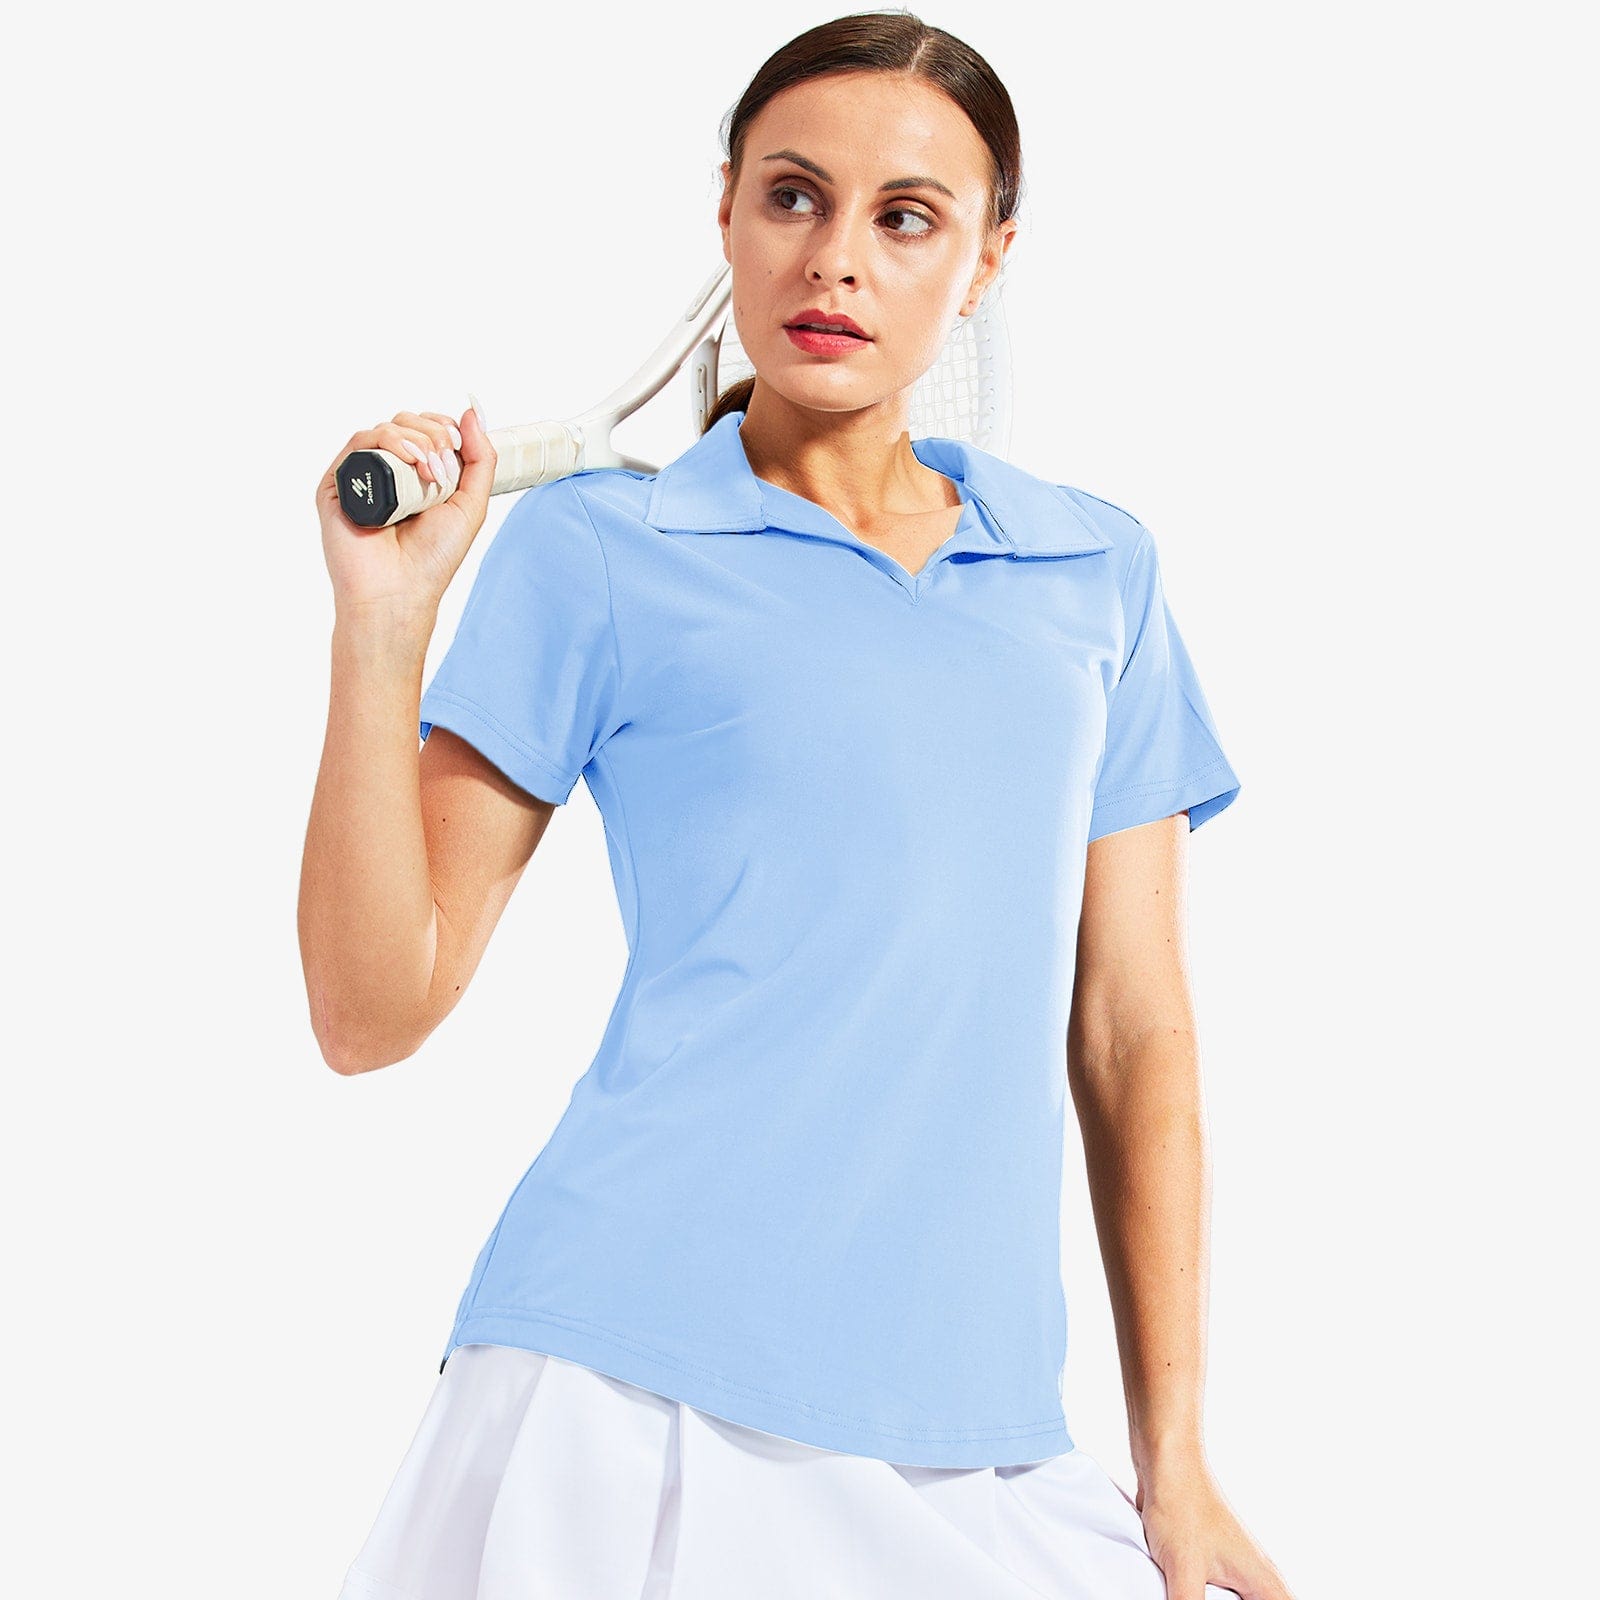 MIER Women's Shirts Collared V Neck Tennis Shirt